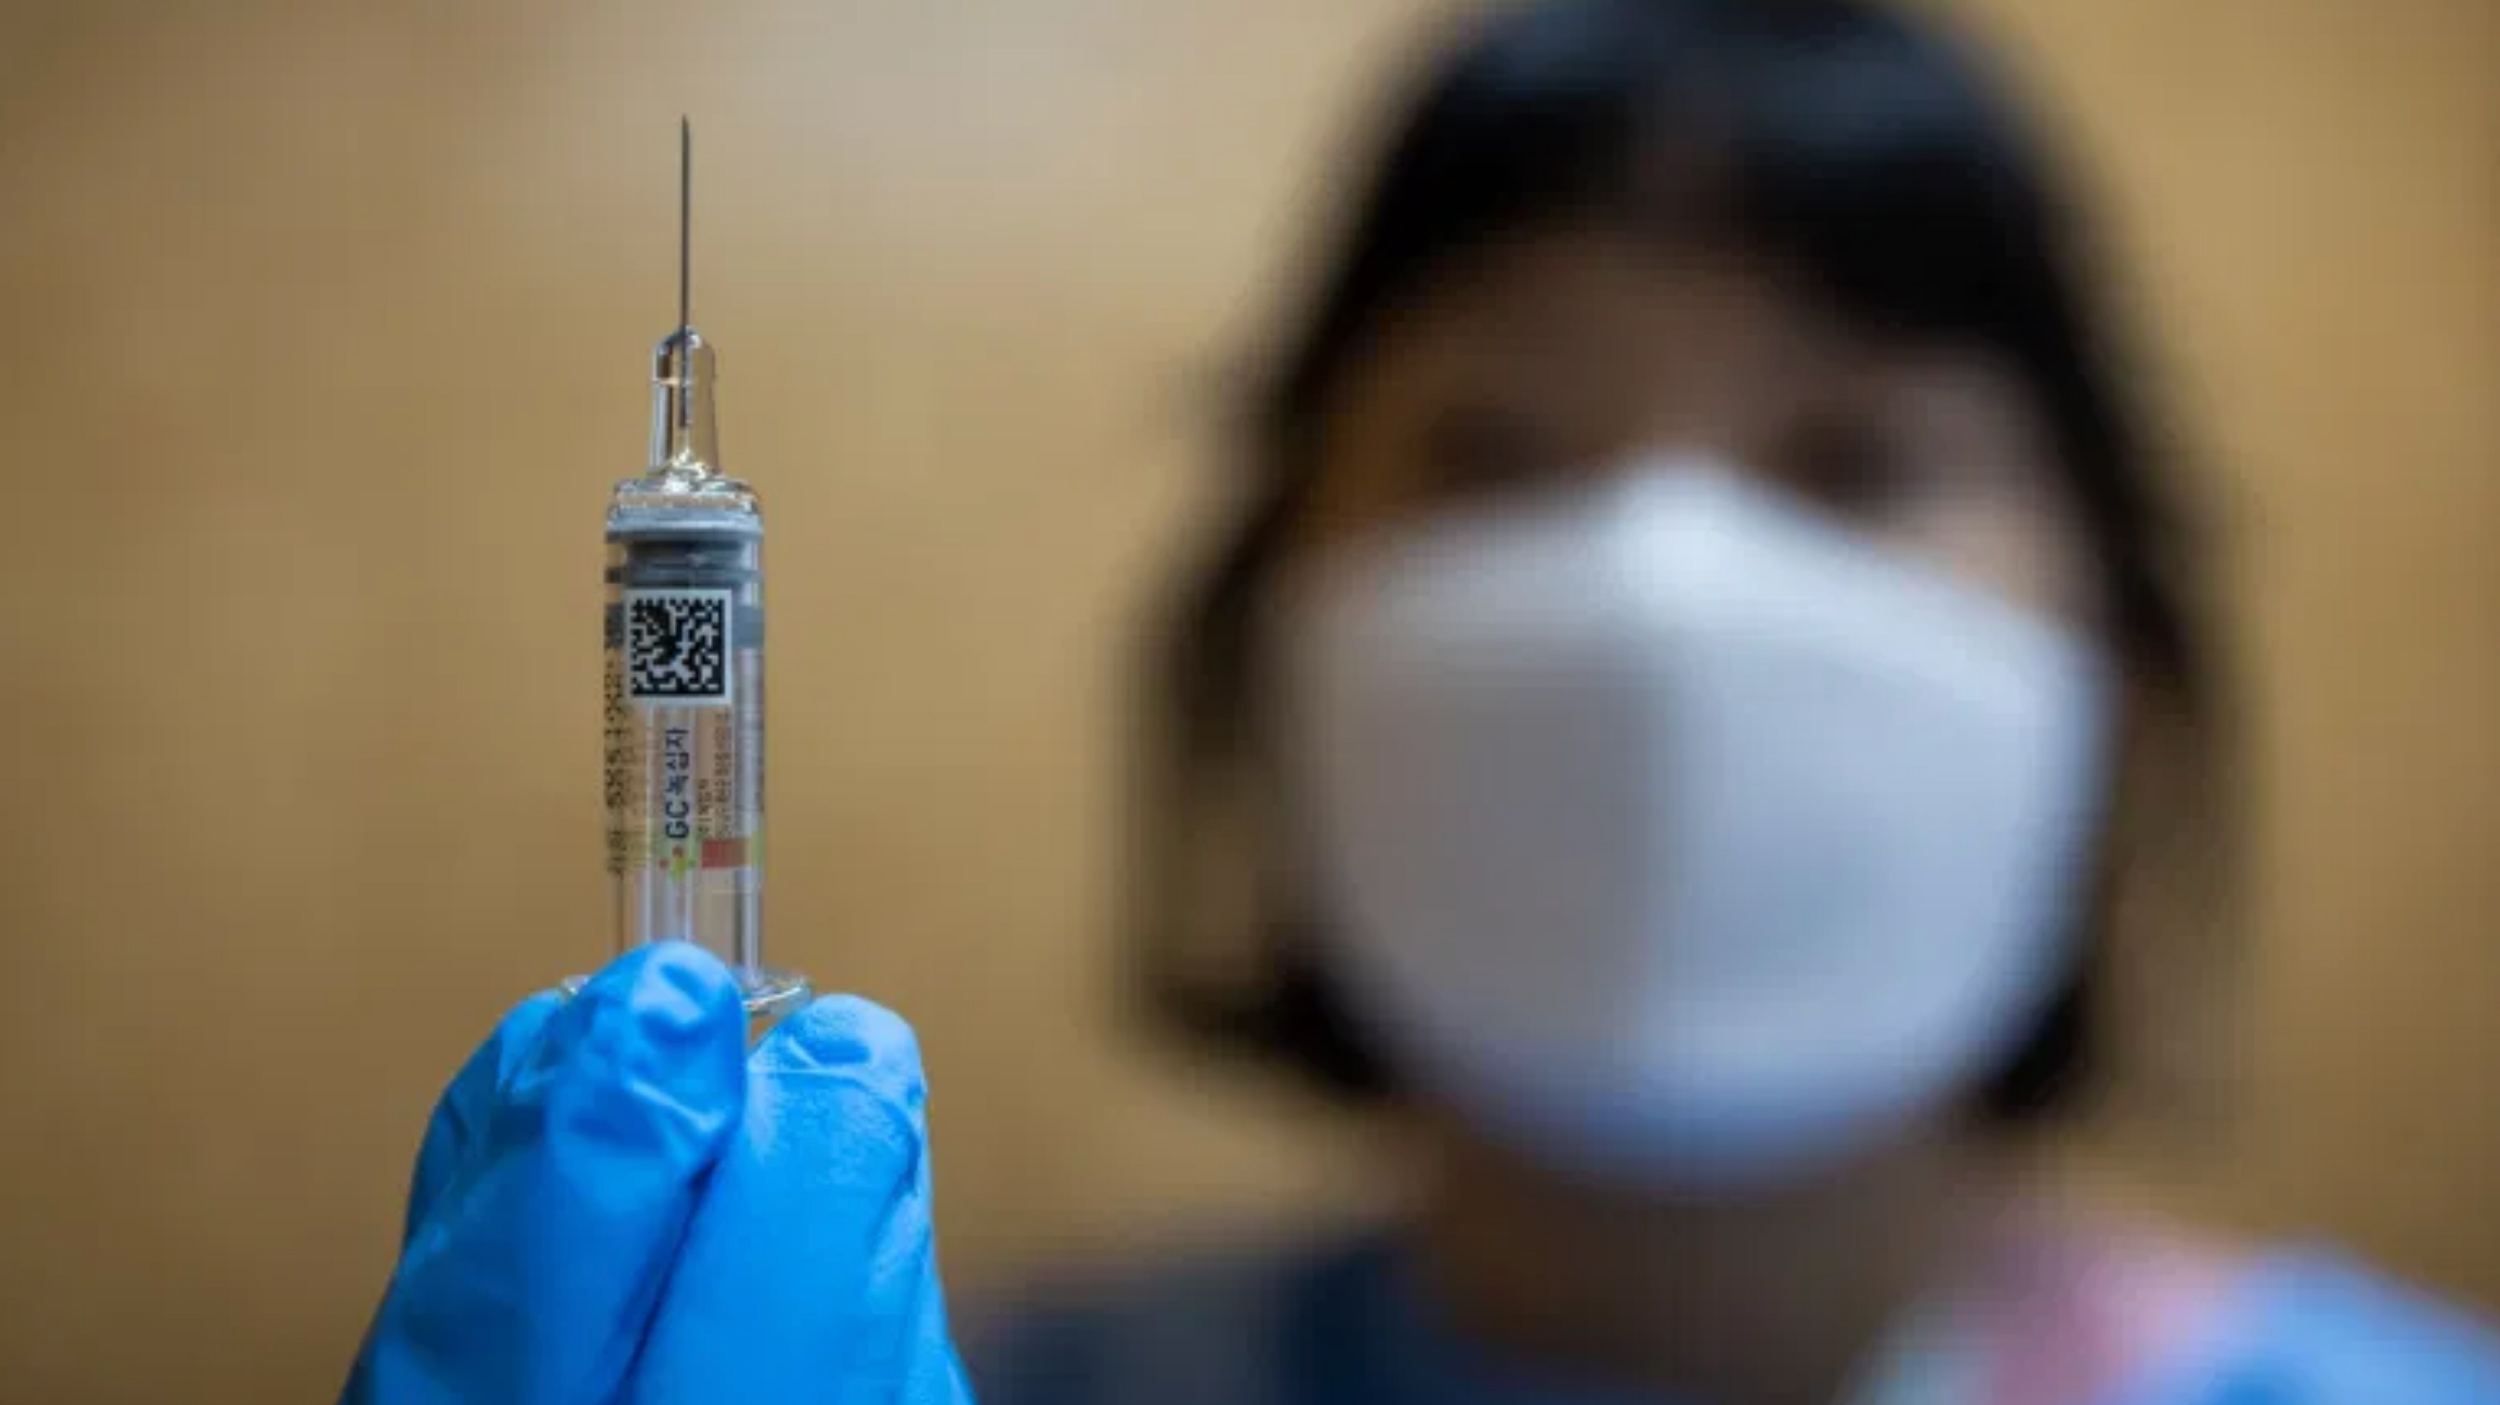 studies.aljazeera.net: Dividing up Covid-19 vaccine: distribution based on countries’ weight